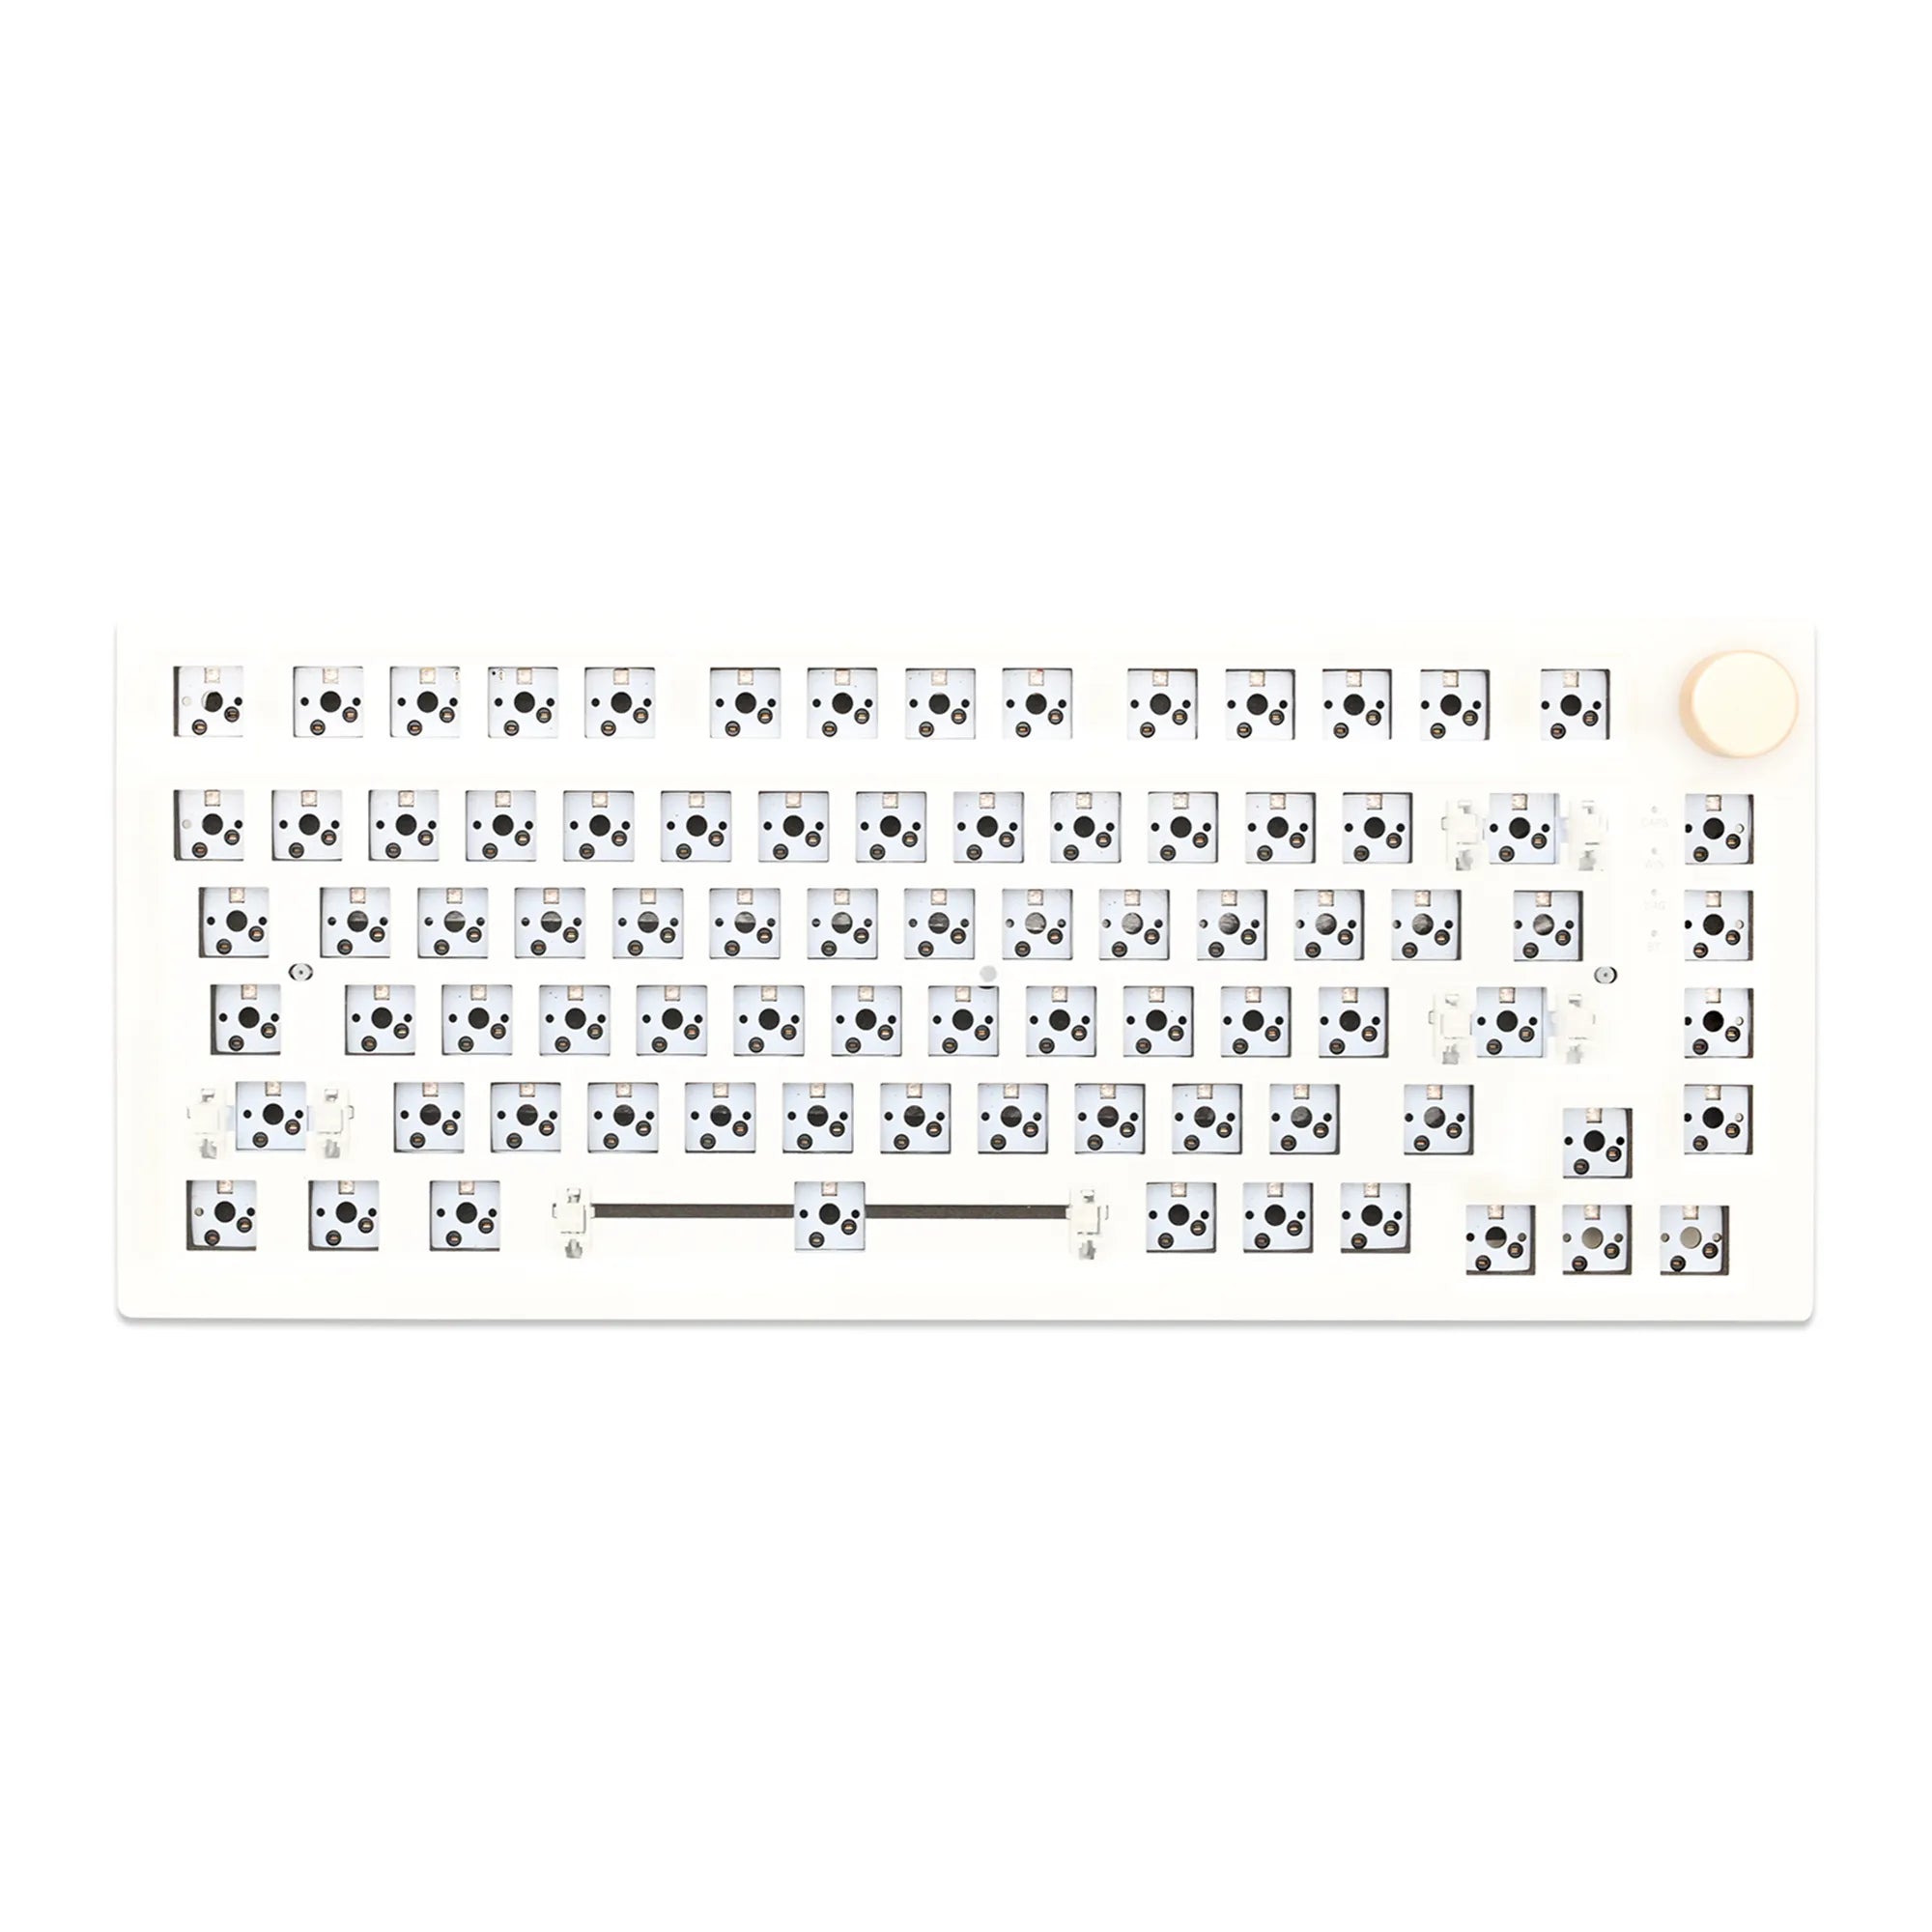 Feker IK75 Pro Wireless 75% Mechanical Keyboard Kit - Gateron Switches